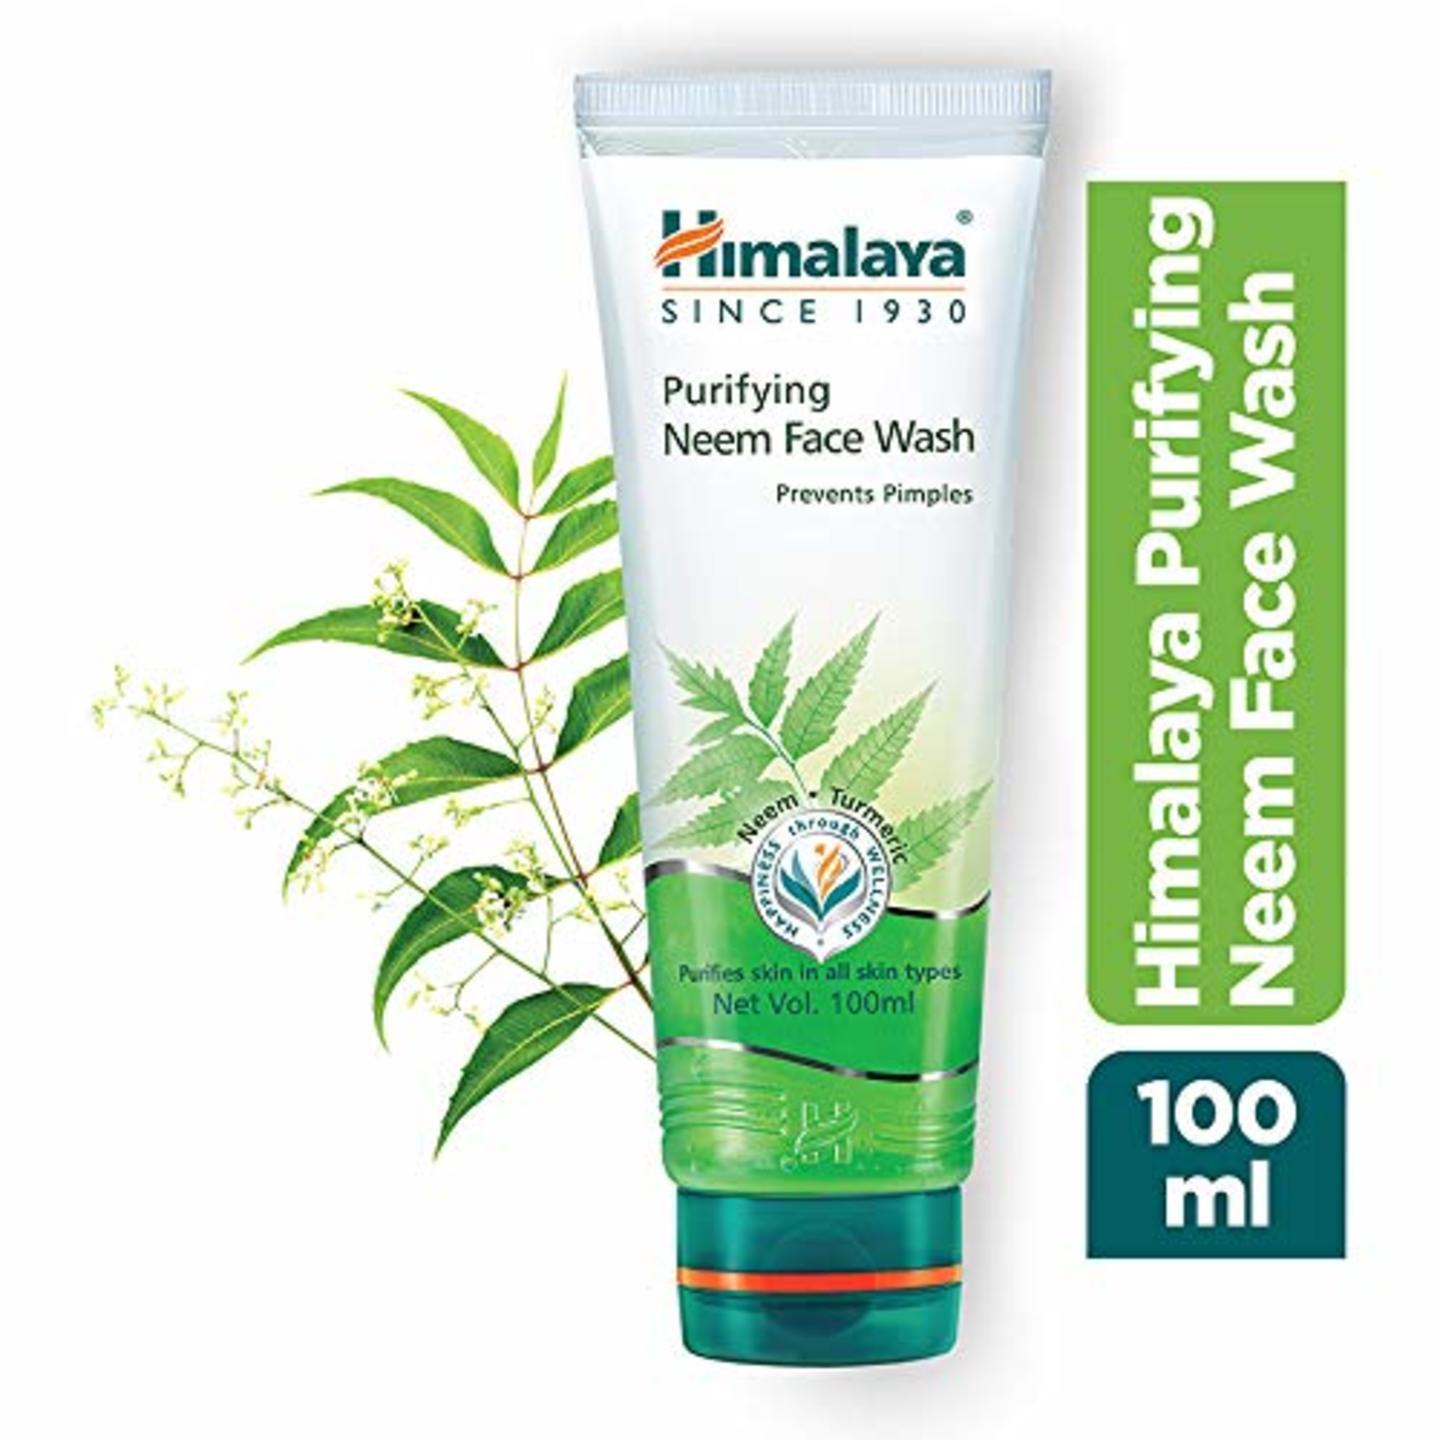 HImalaya Purifying Neem Face Wash 100Ml